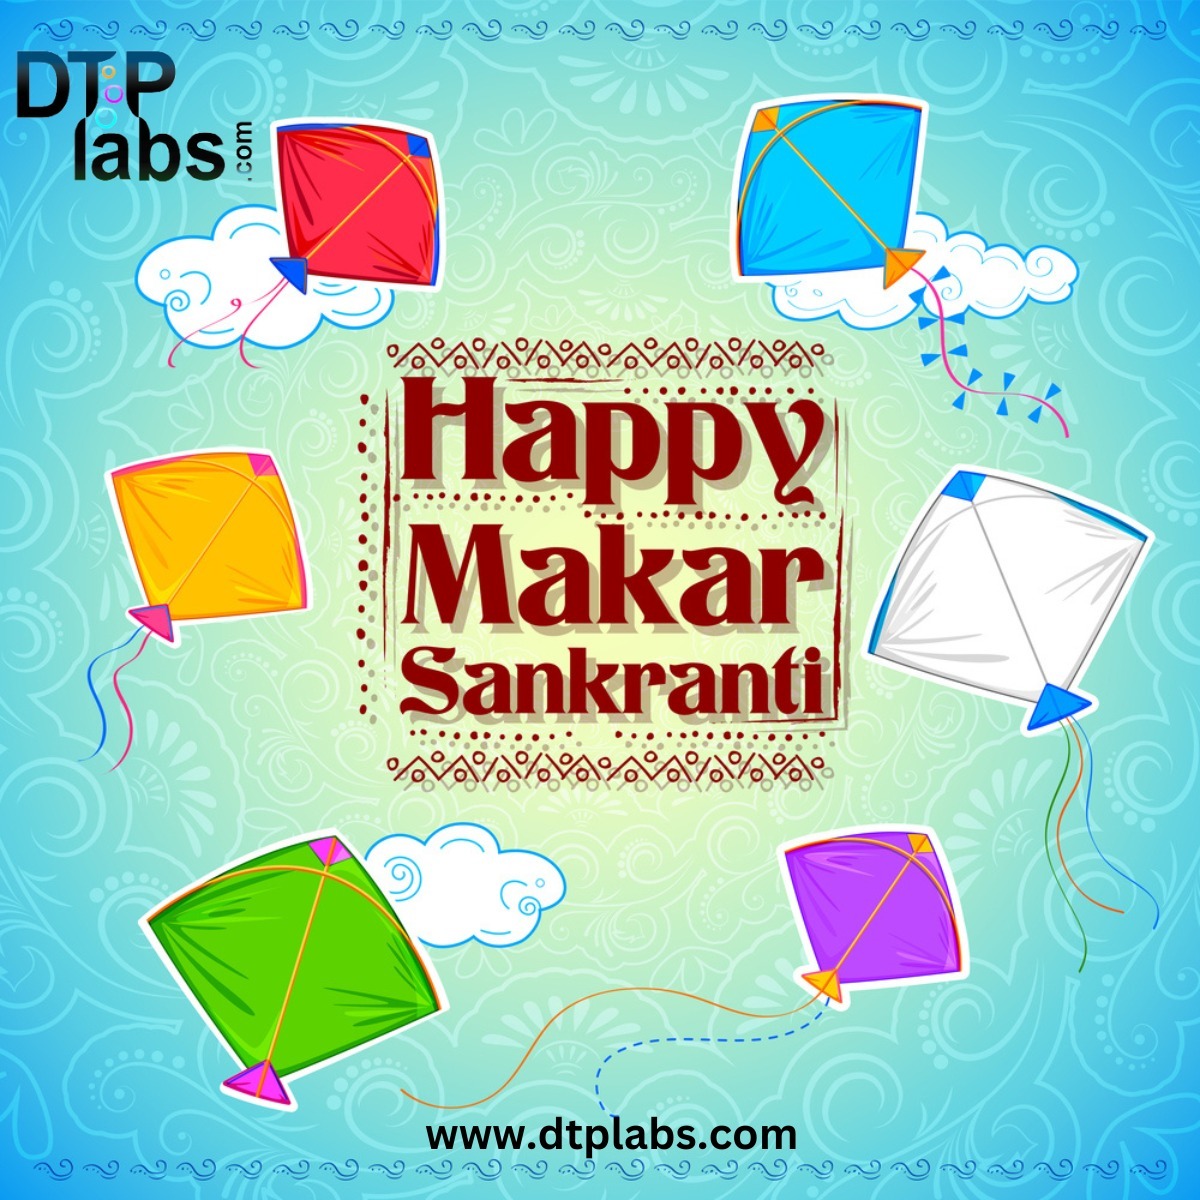 DTP Labs Wishes you Happy Makar Sankranti 
.
.
.
.
#MakarSankranti #festivalofjoy #makarsankranti #kite #festivefun #celebration #dtplabs